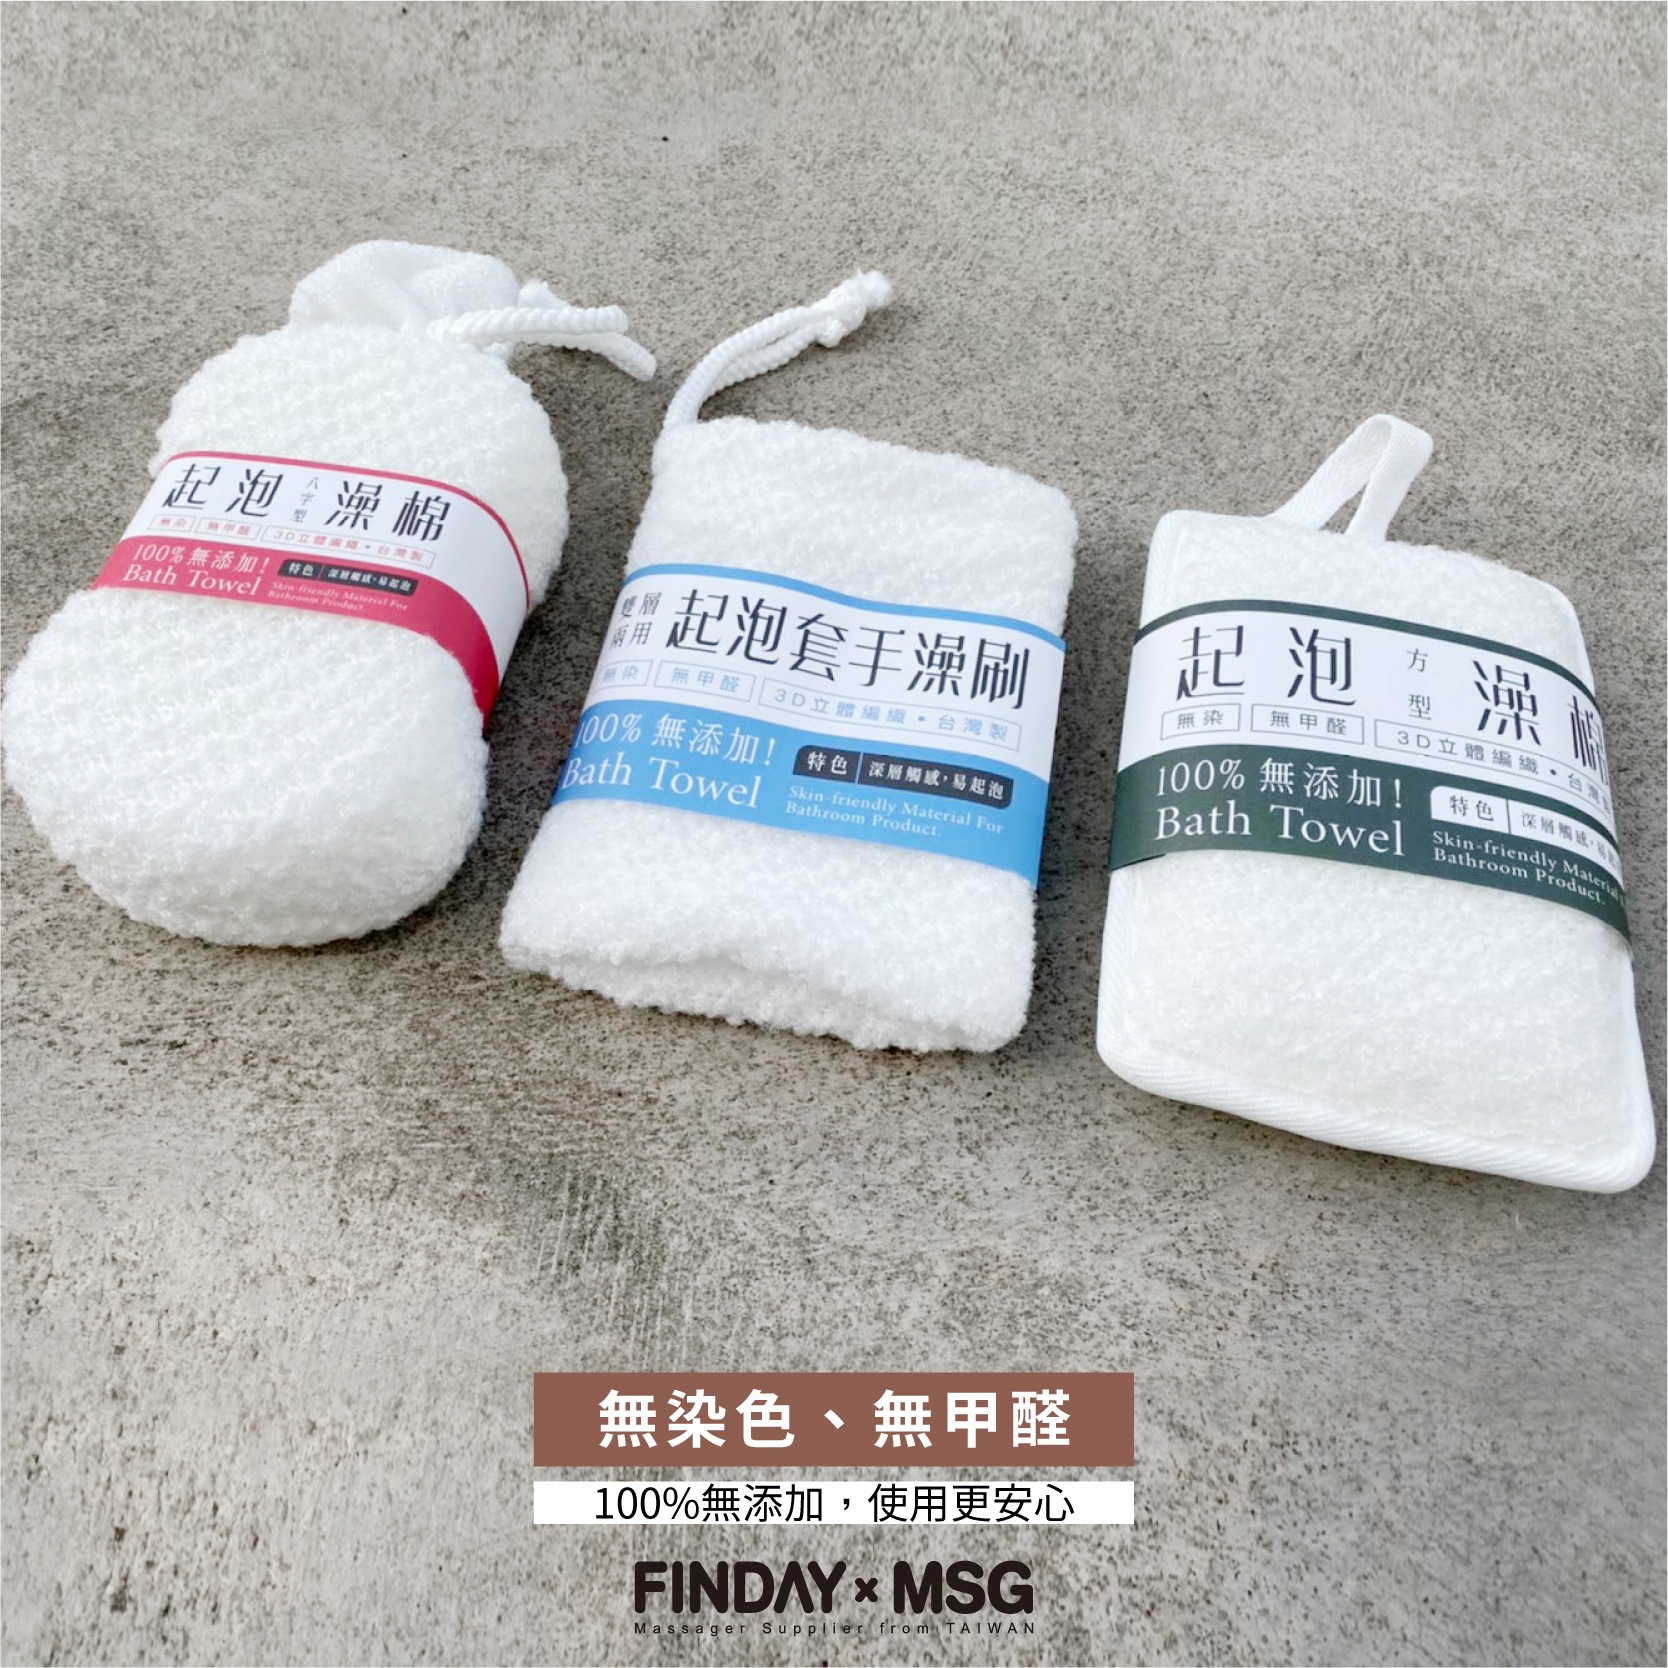 04-0135_bath towel-011